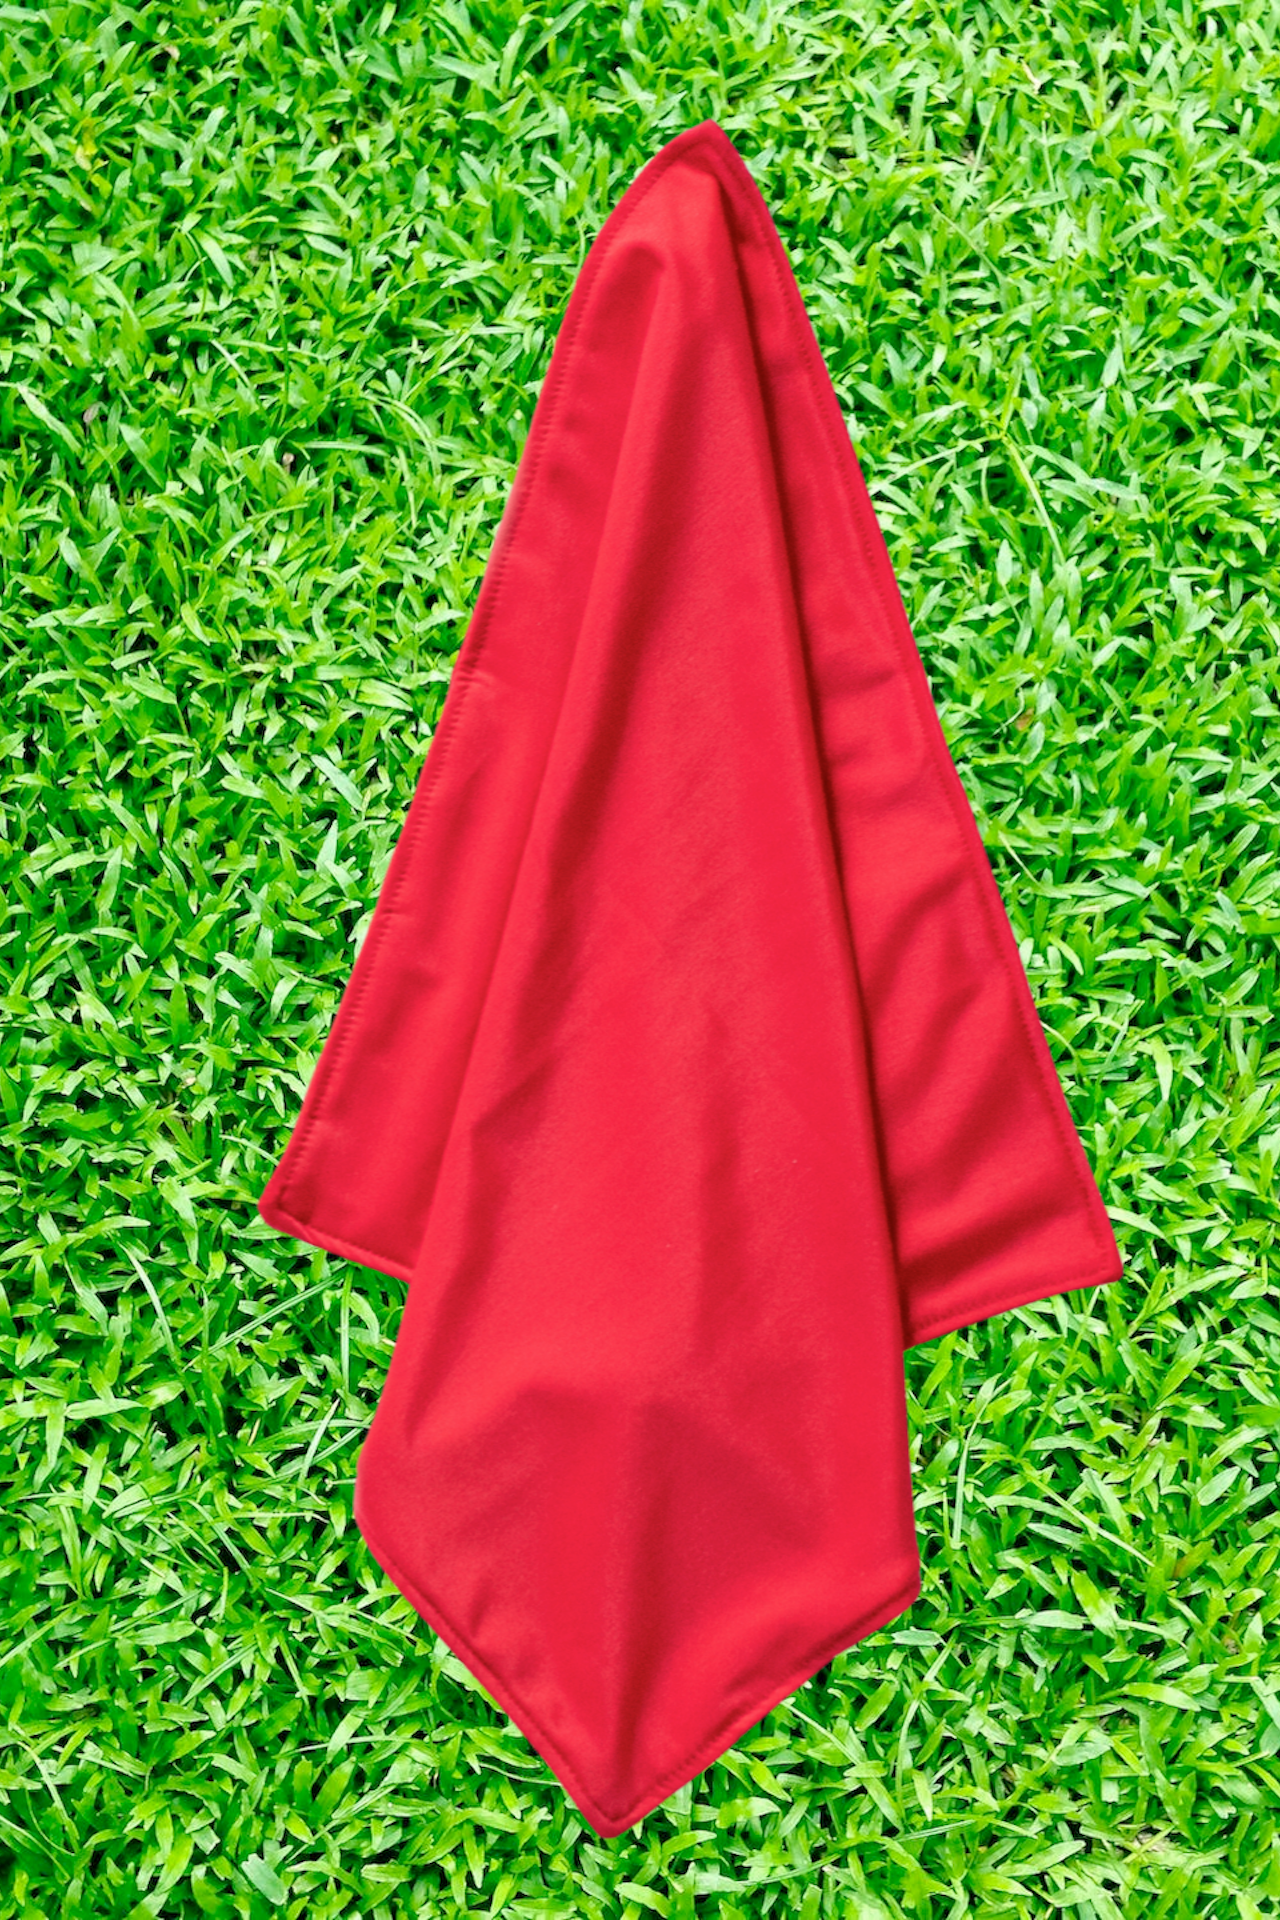 Red calm cloth